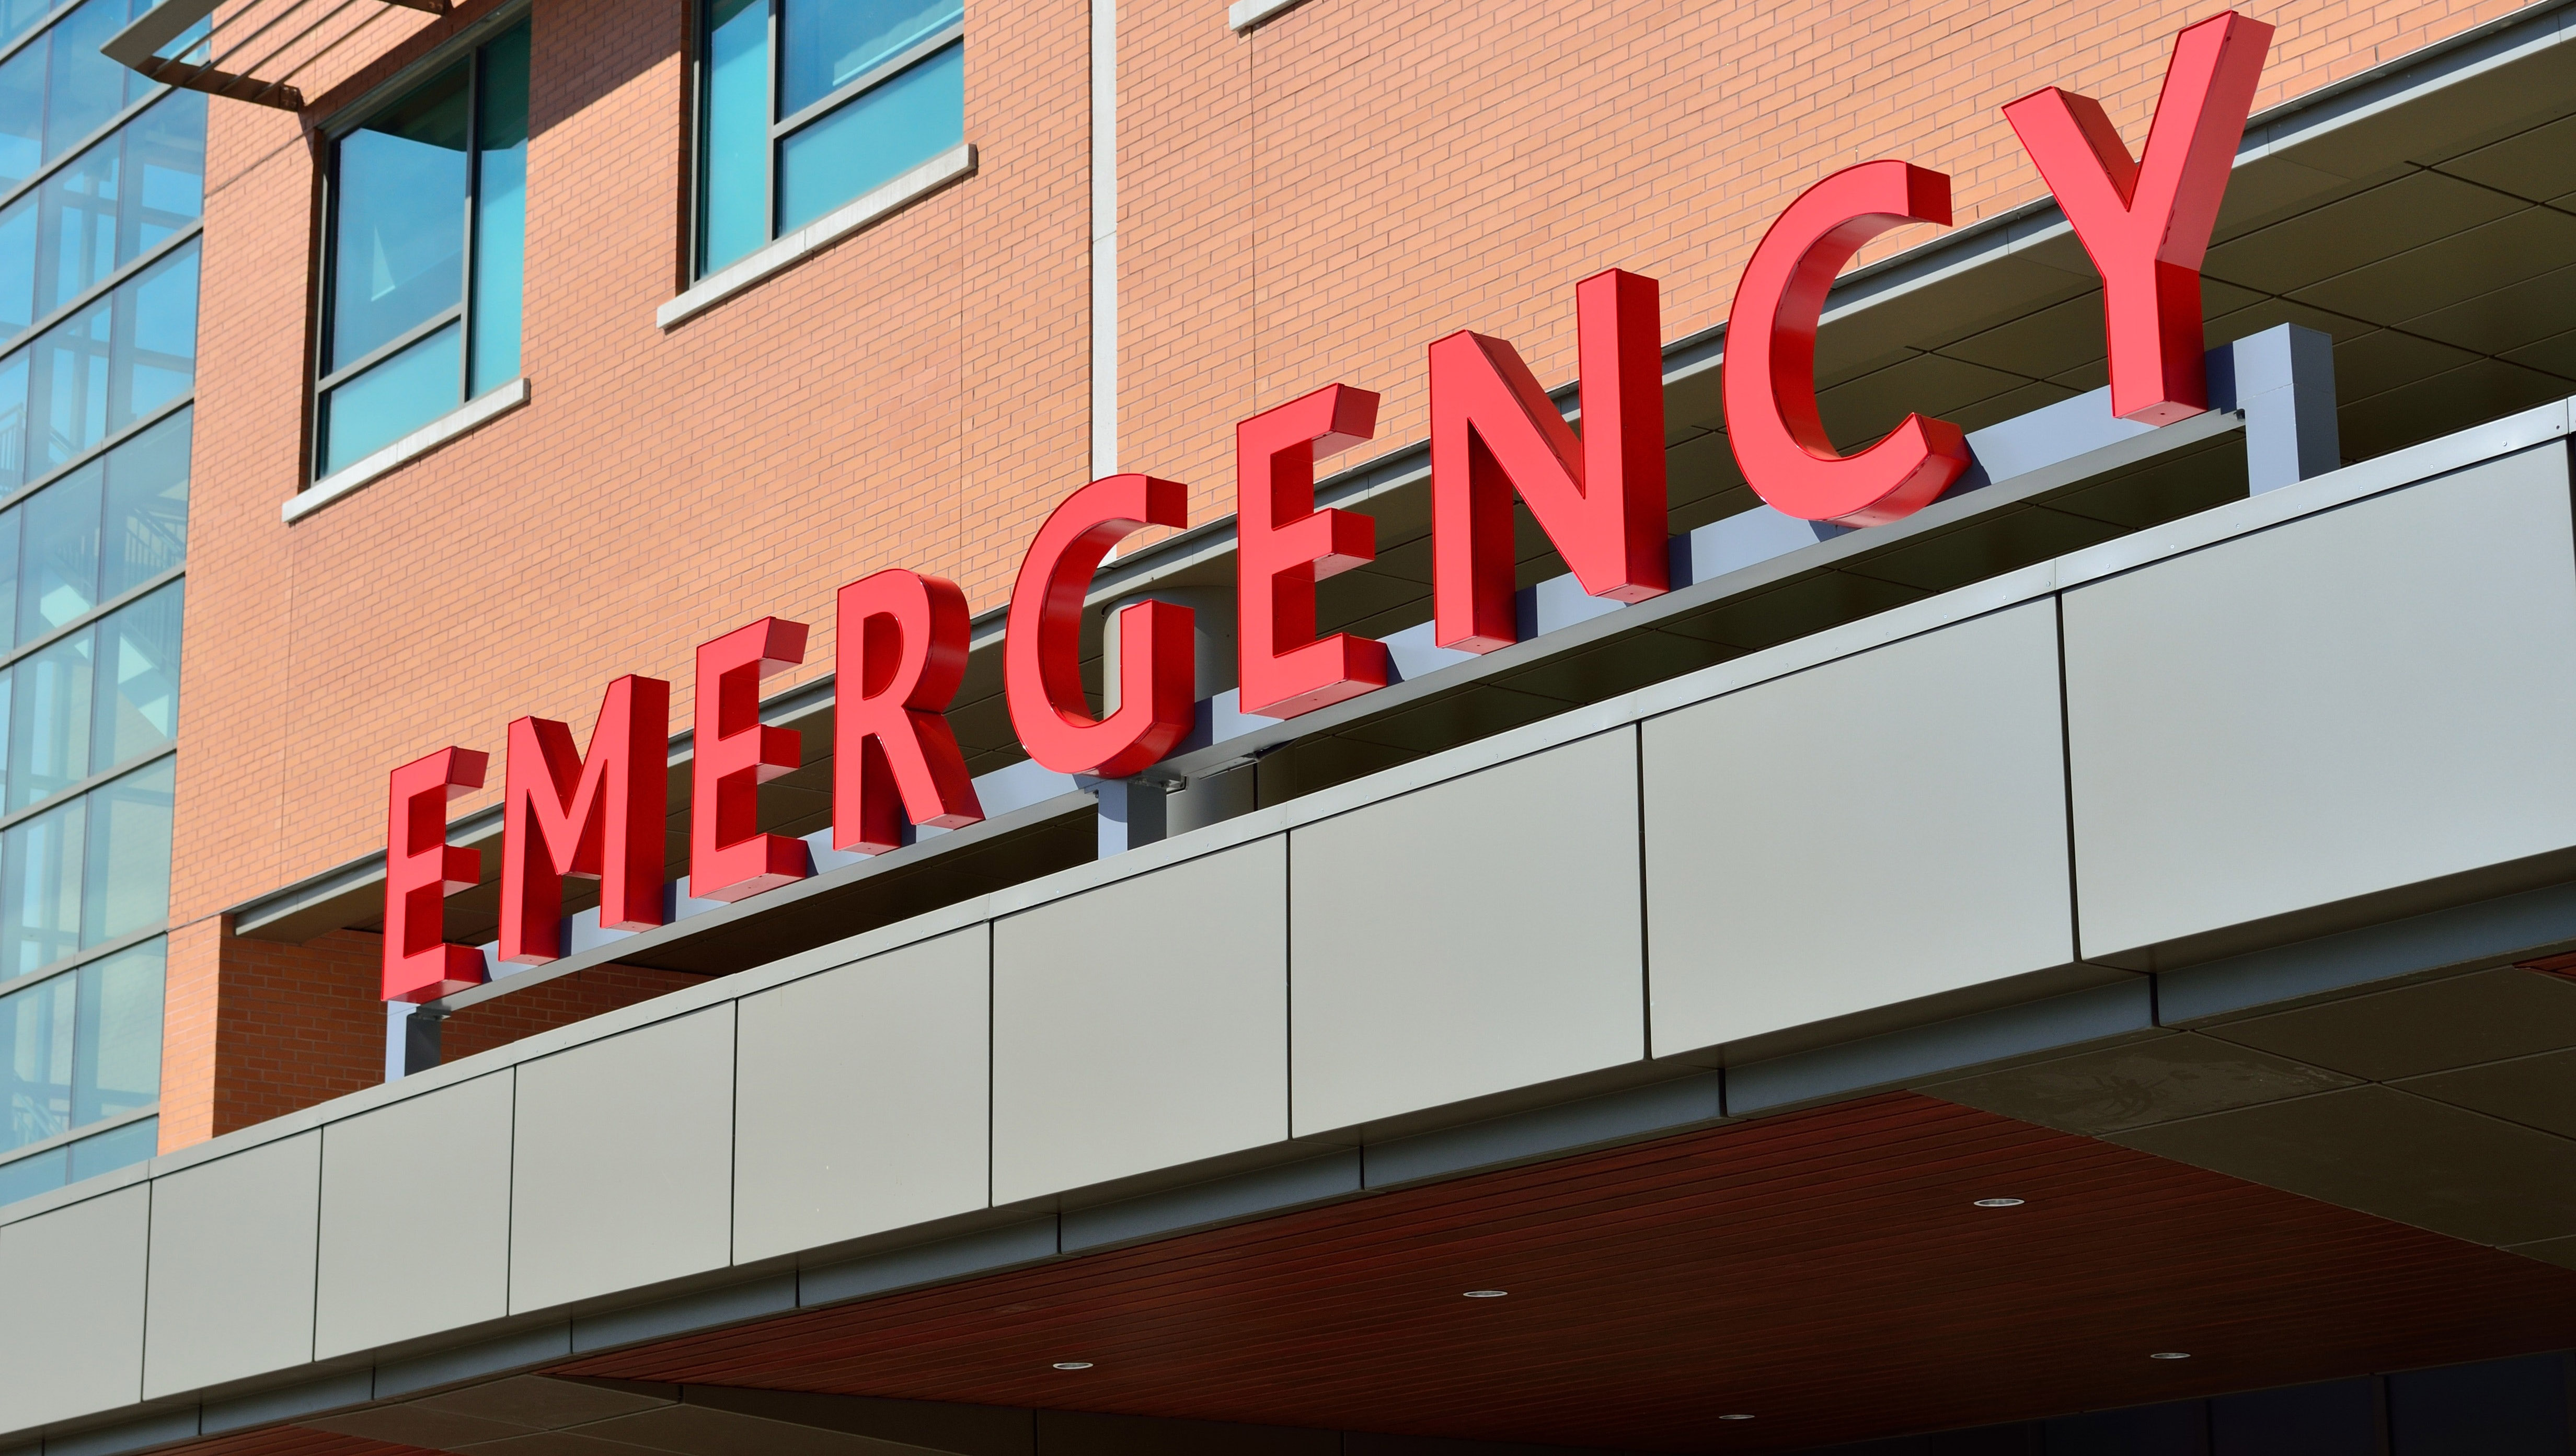 Emergency Sign at Hospital